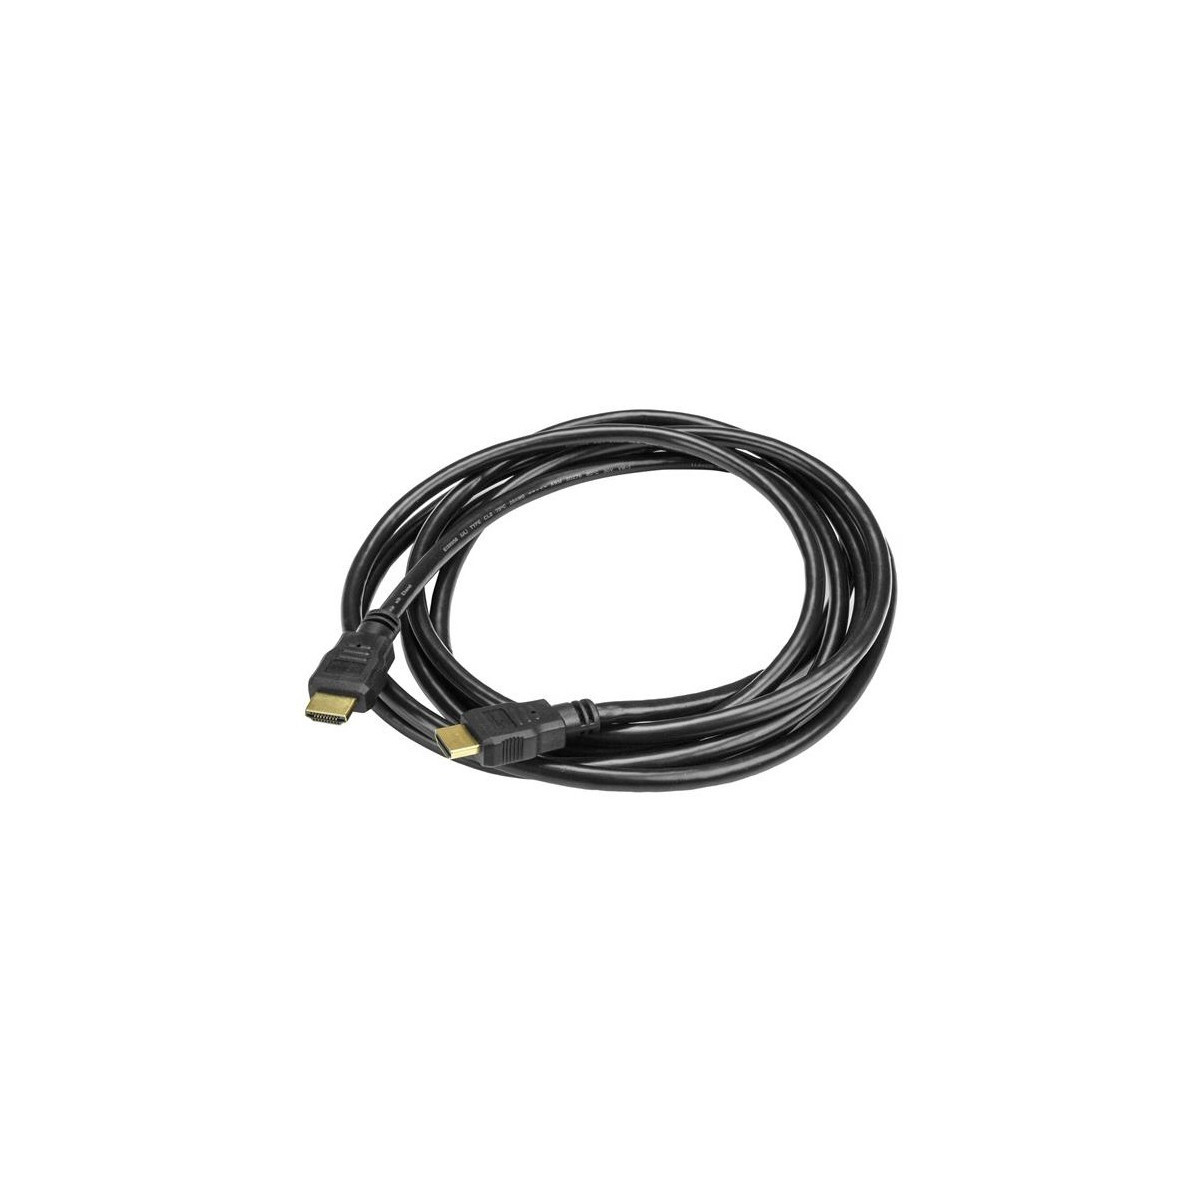 Câble HDMI, High speed, canal Ethernet (1.4), plat et adhésif